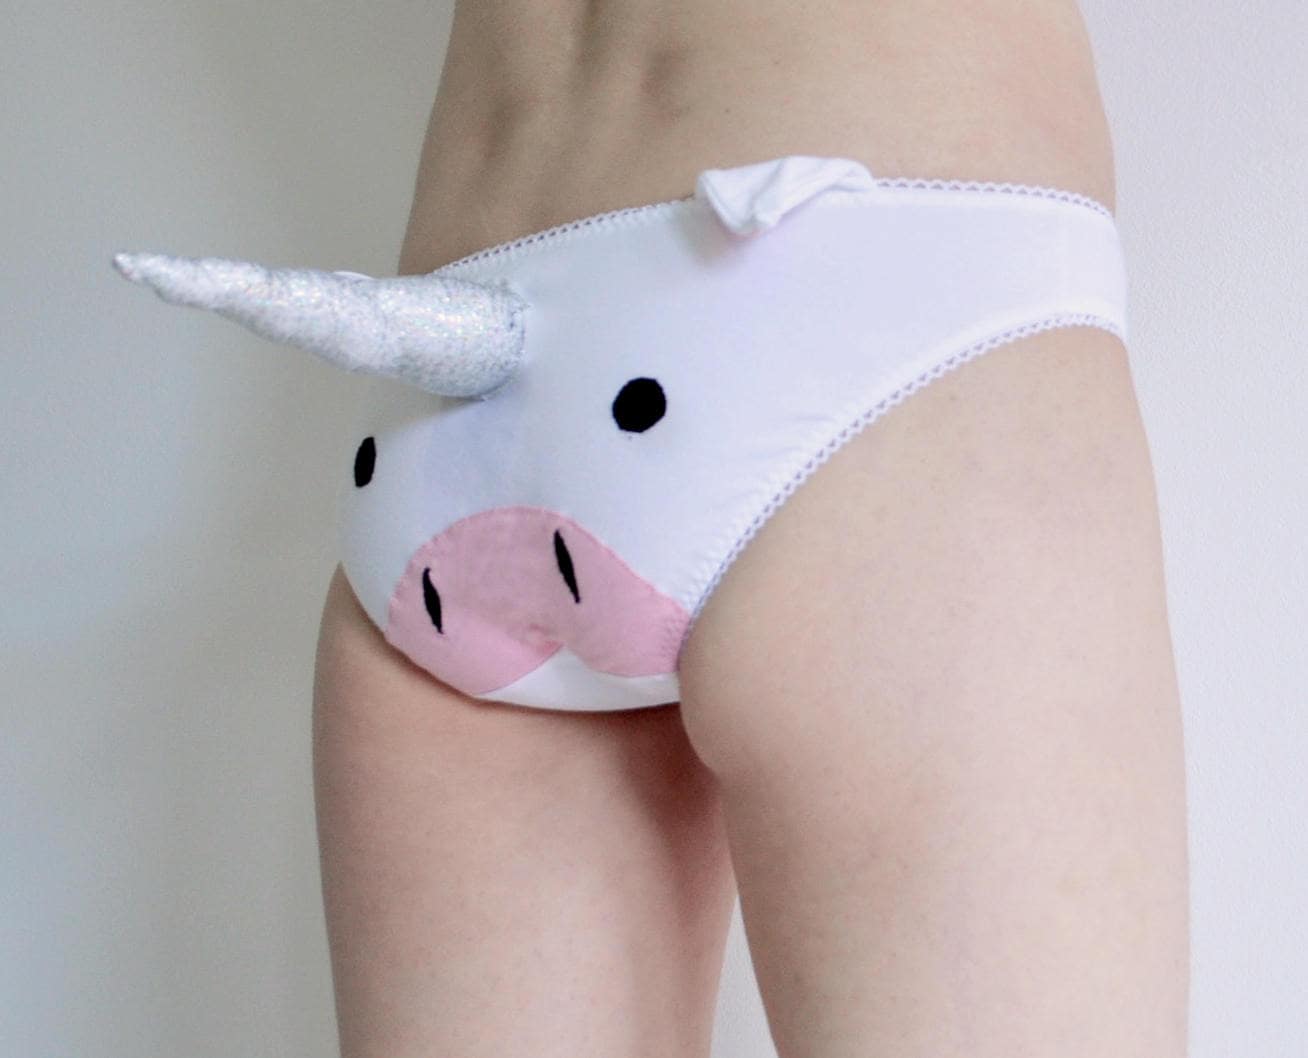 Buy MAMAC Star Starry Unicorn Panty Custom Cotton Underwear Ladies